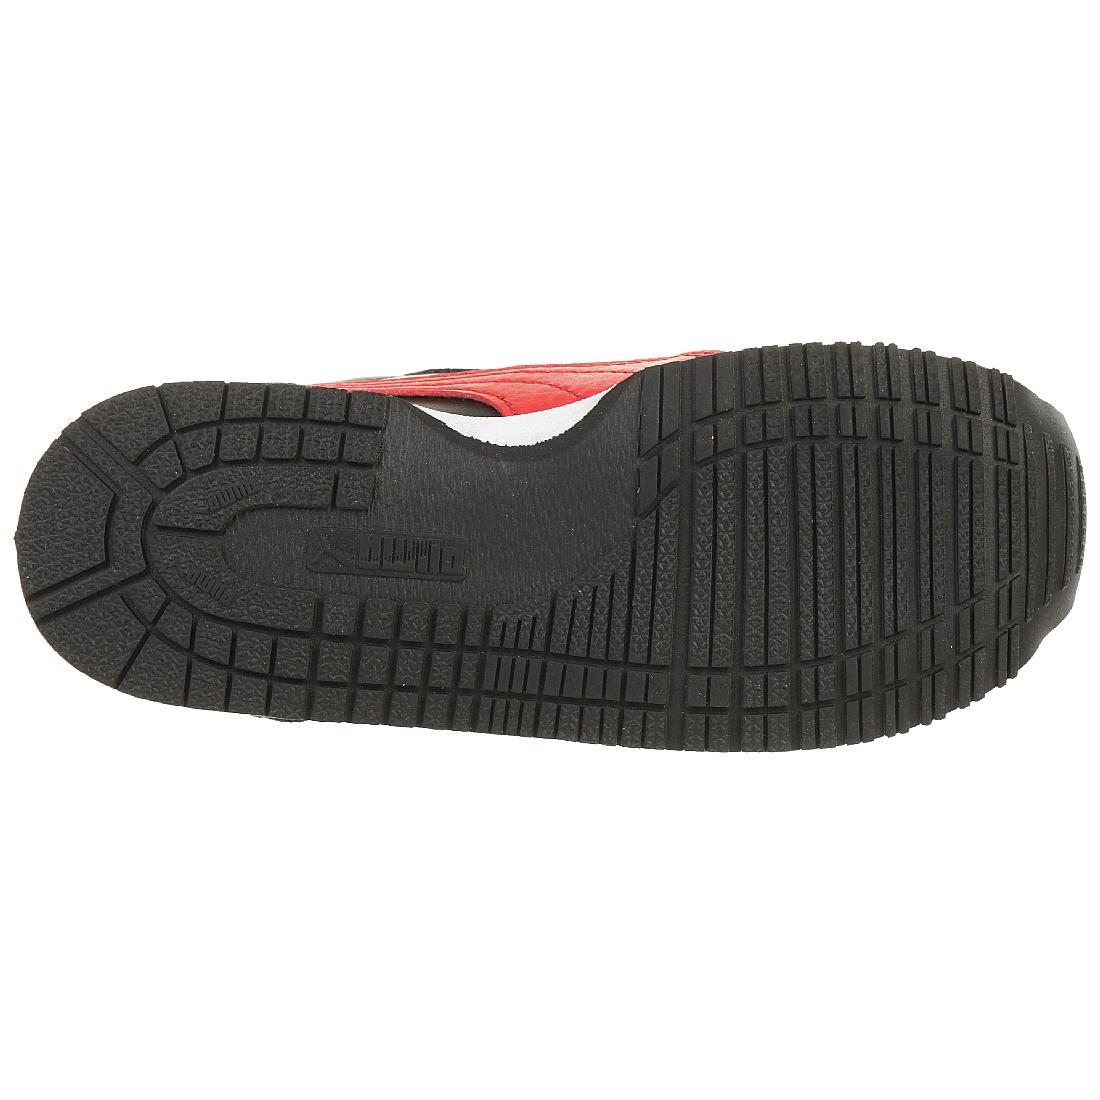 PUMA Cabana Racer SL V PS Kids Sneaker Schuhe schwarz 360732 72